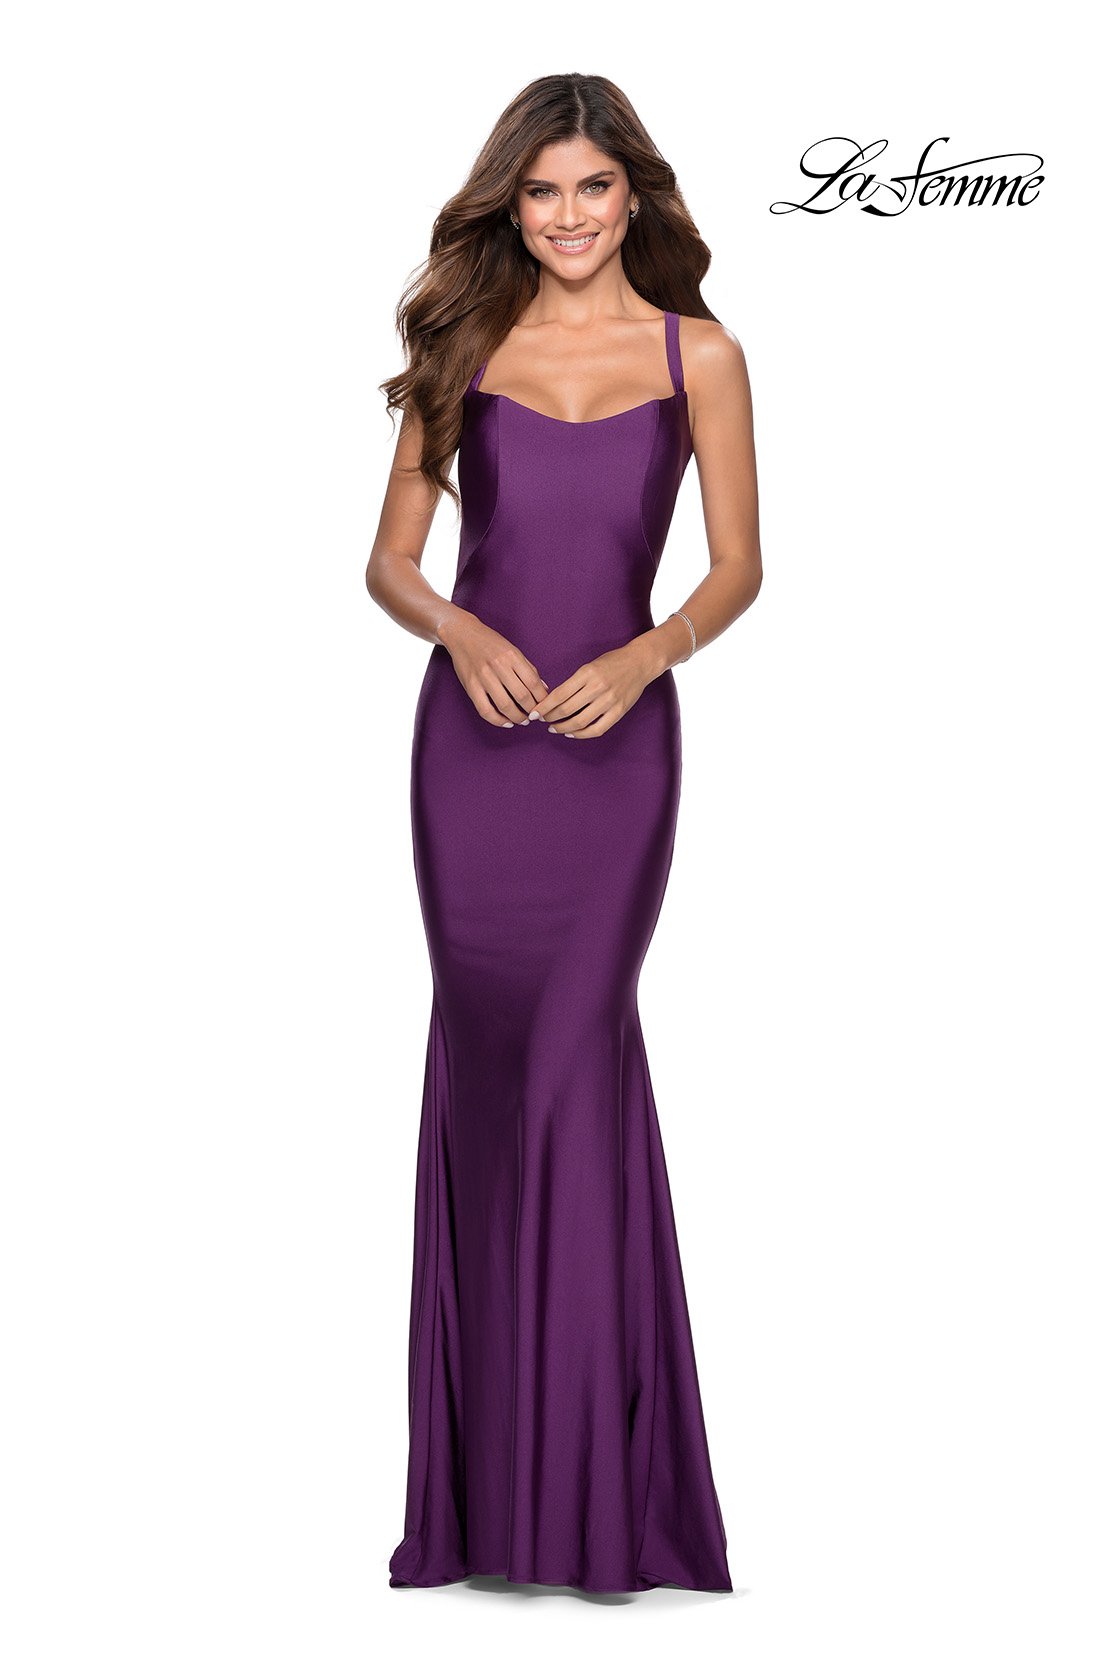 La Femme 28568 dress images in these colors: Black, Burgundy, Emerald, Royal Blue, Royal Purple.